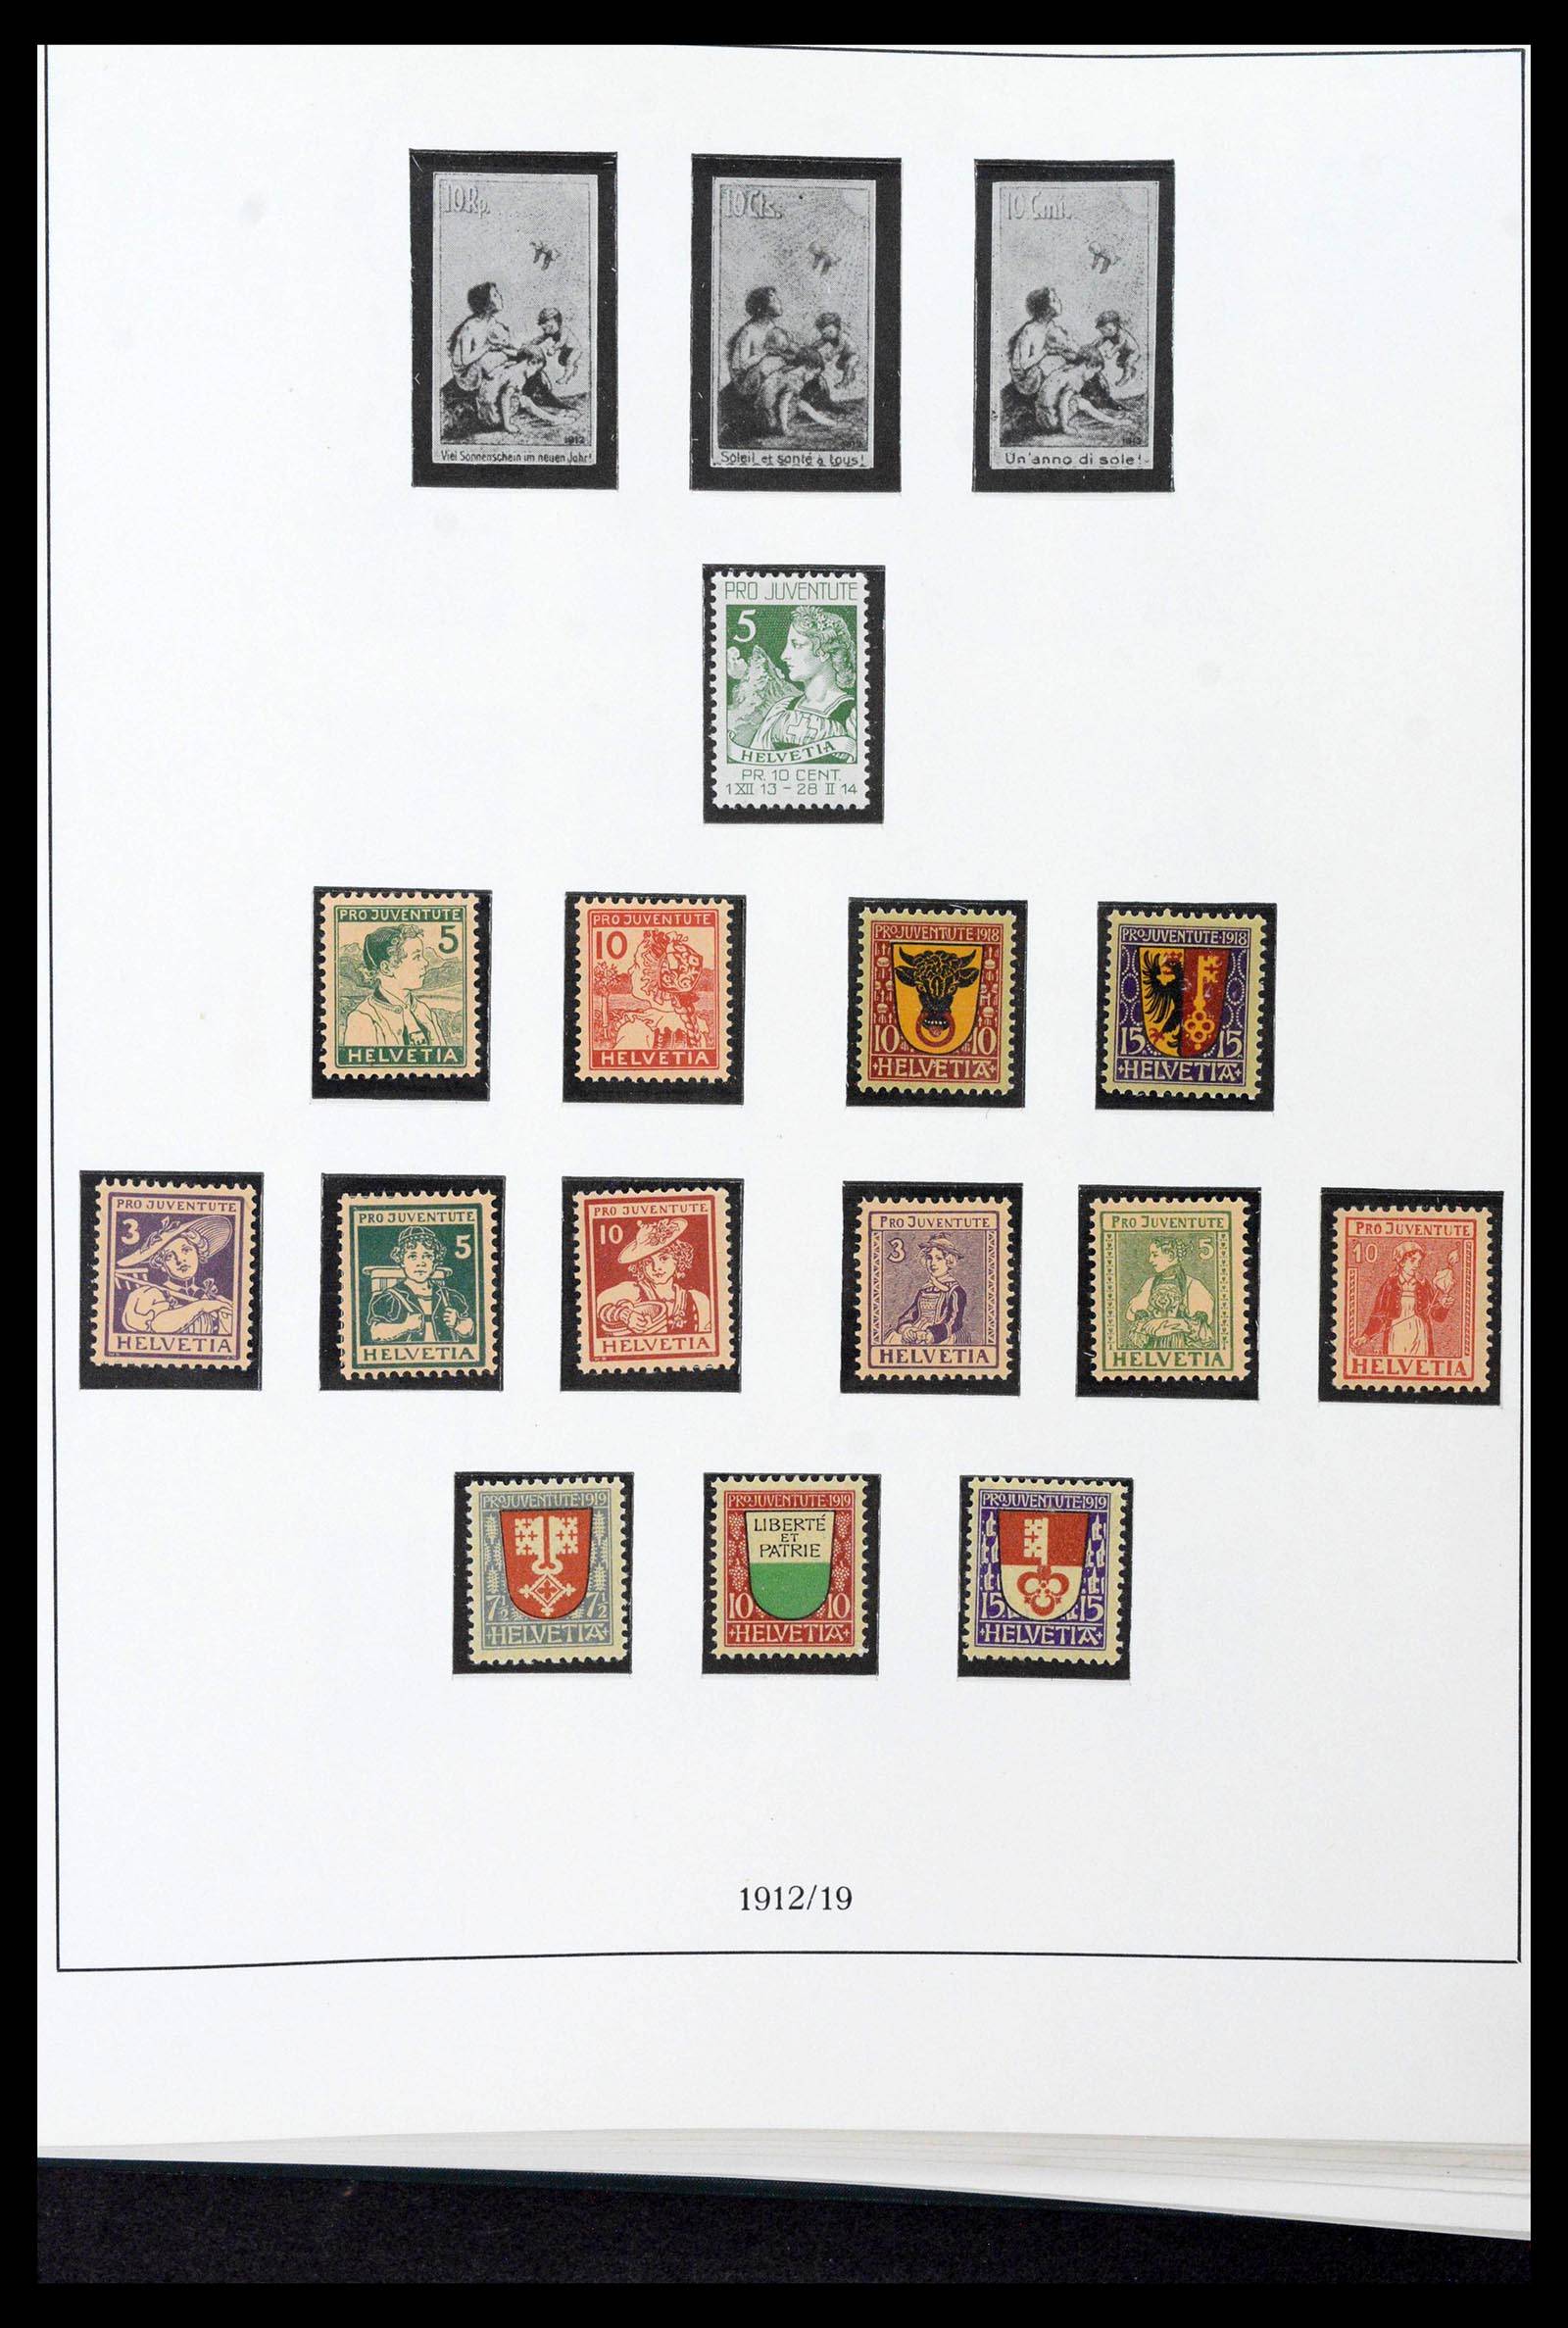 39235 0018 - Stamp collection 39235 Switzerland 1843-1960.